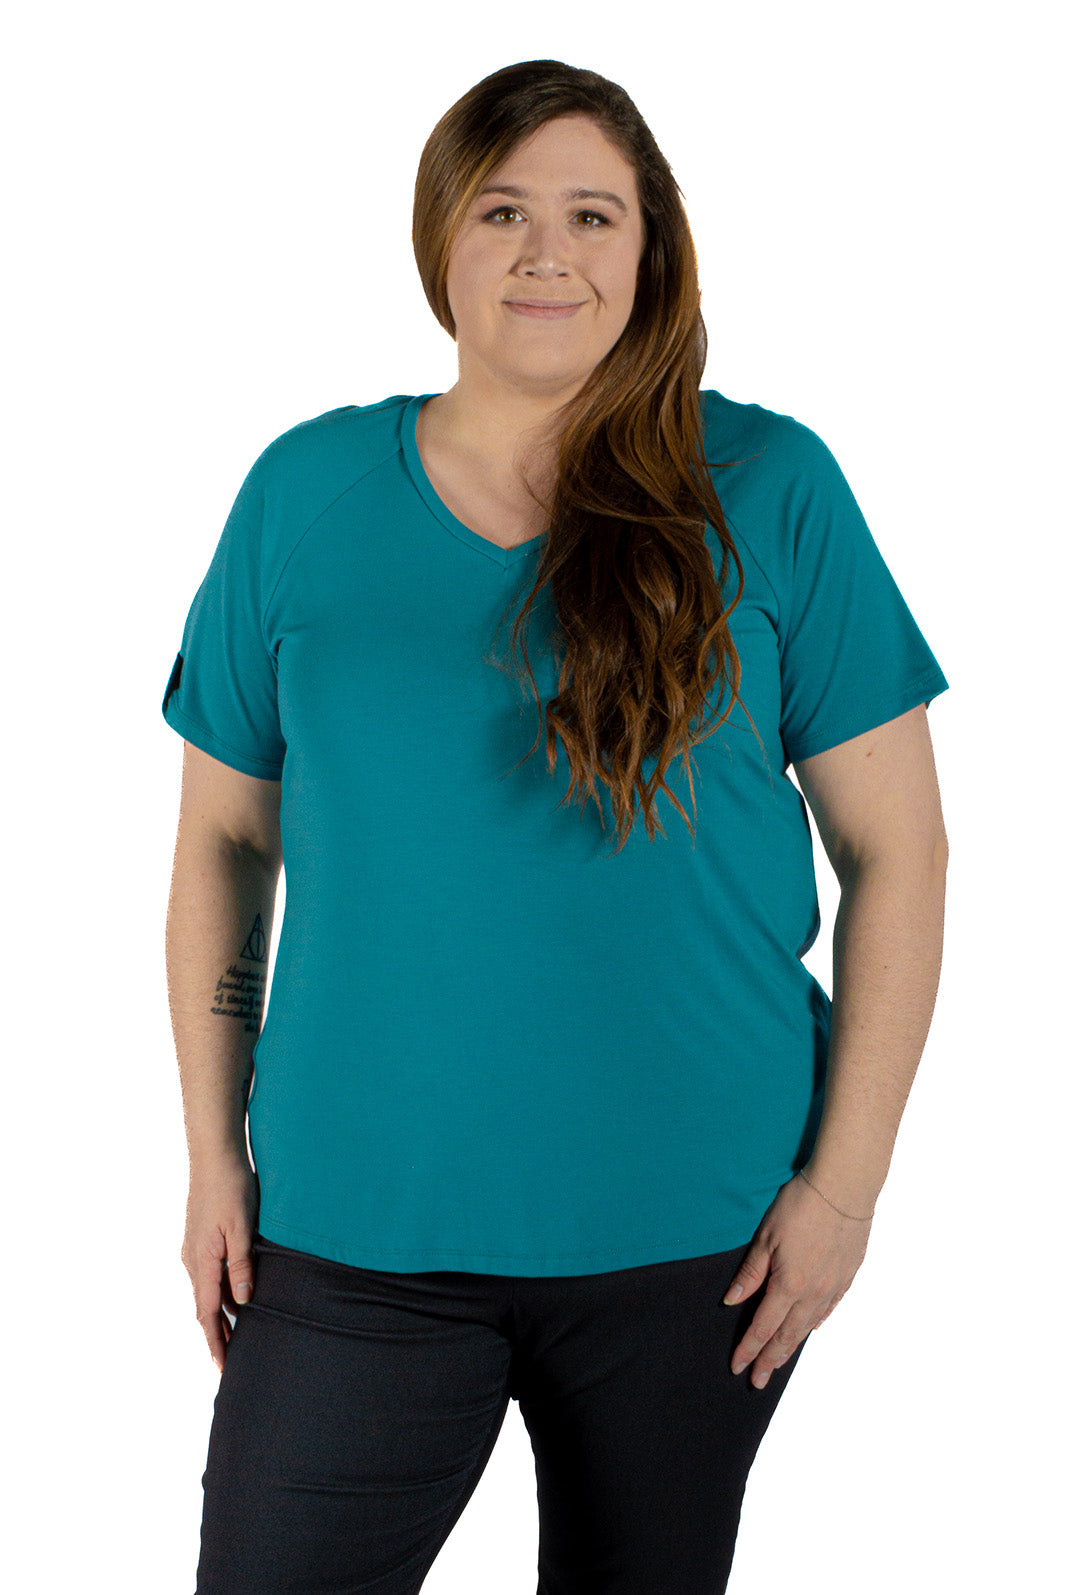 Plus Size V-Neck Appalachian Viscose T-Shirt by Sportive Plus